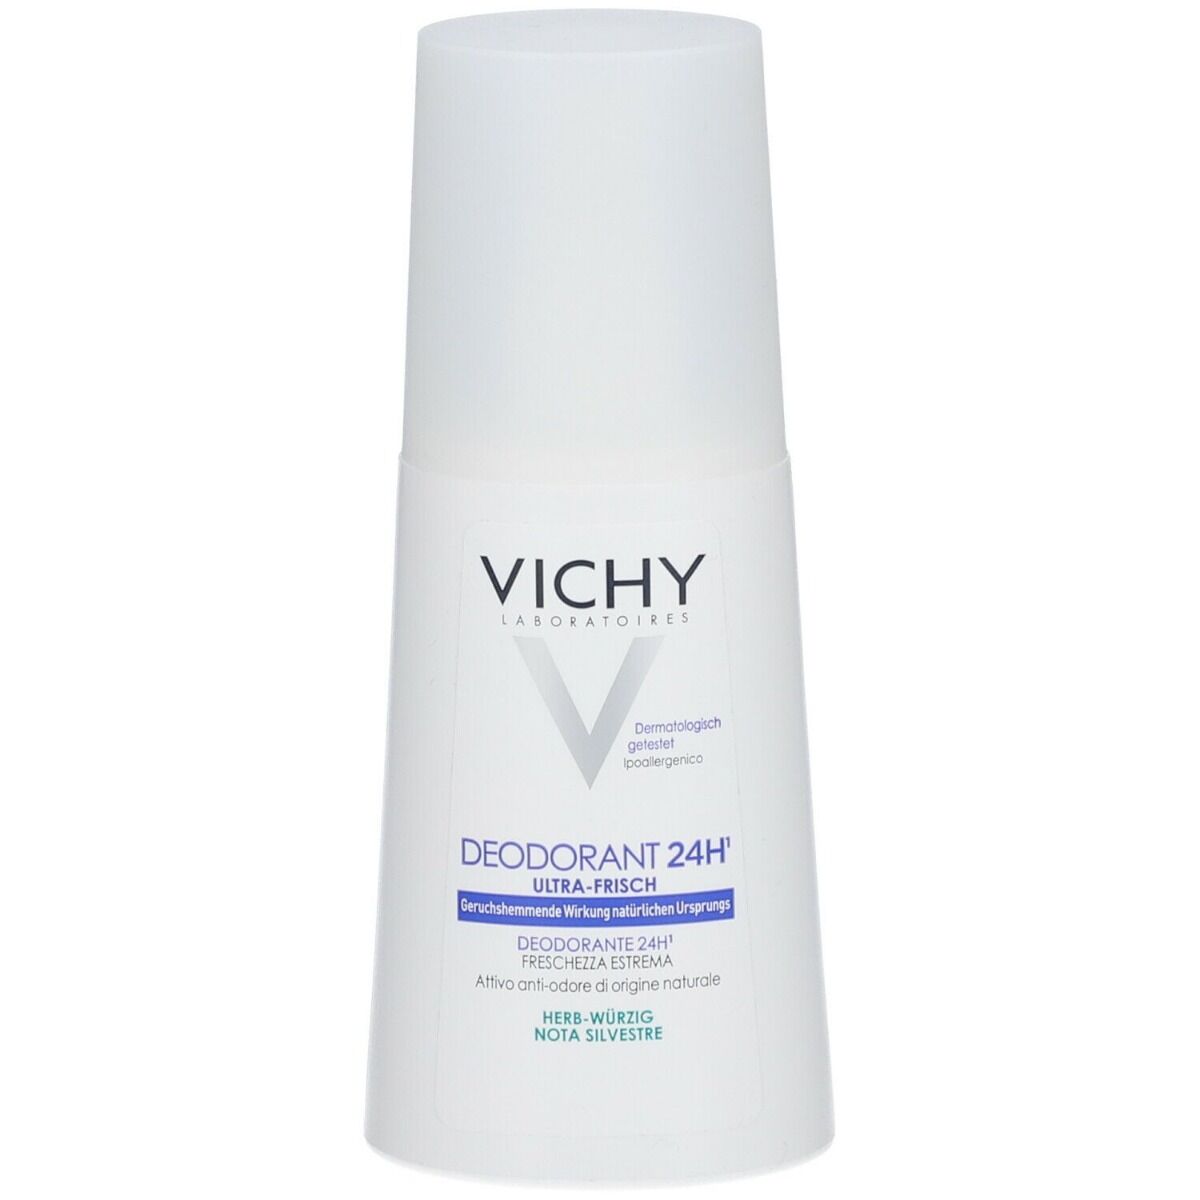 Vichy Deodorante vapo Freschezza Estrema 24H Nota silvestre 100 ml